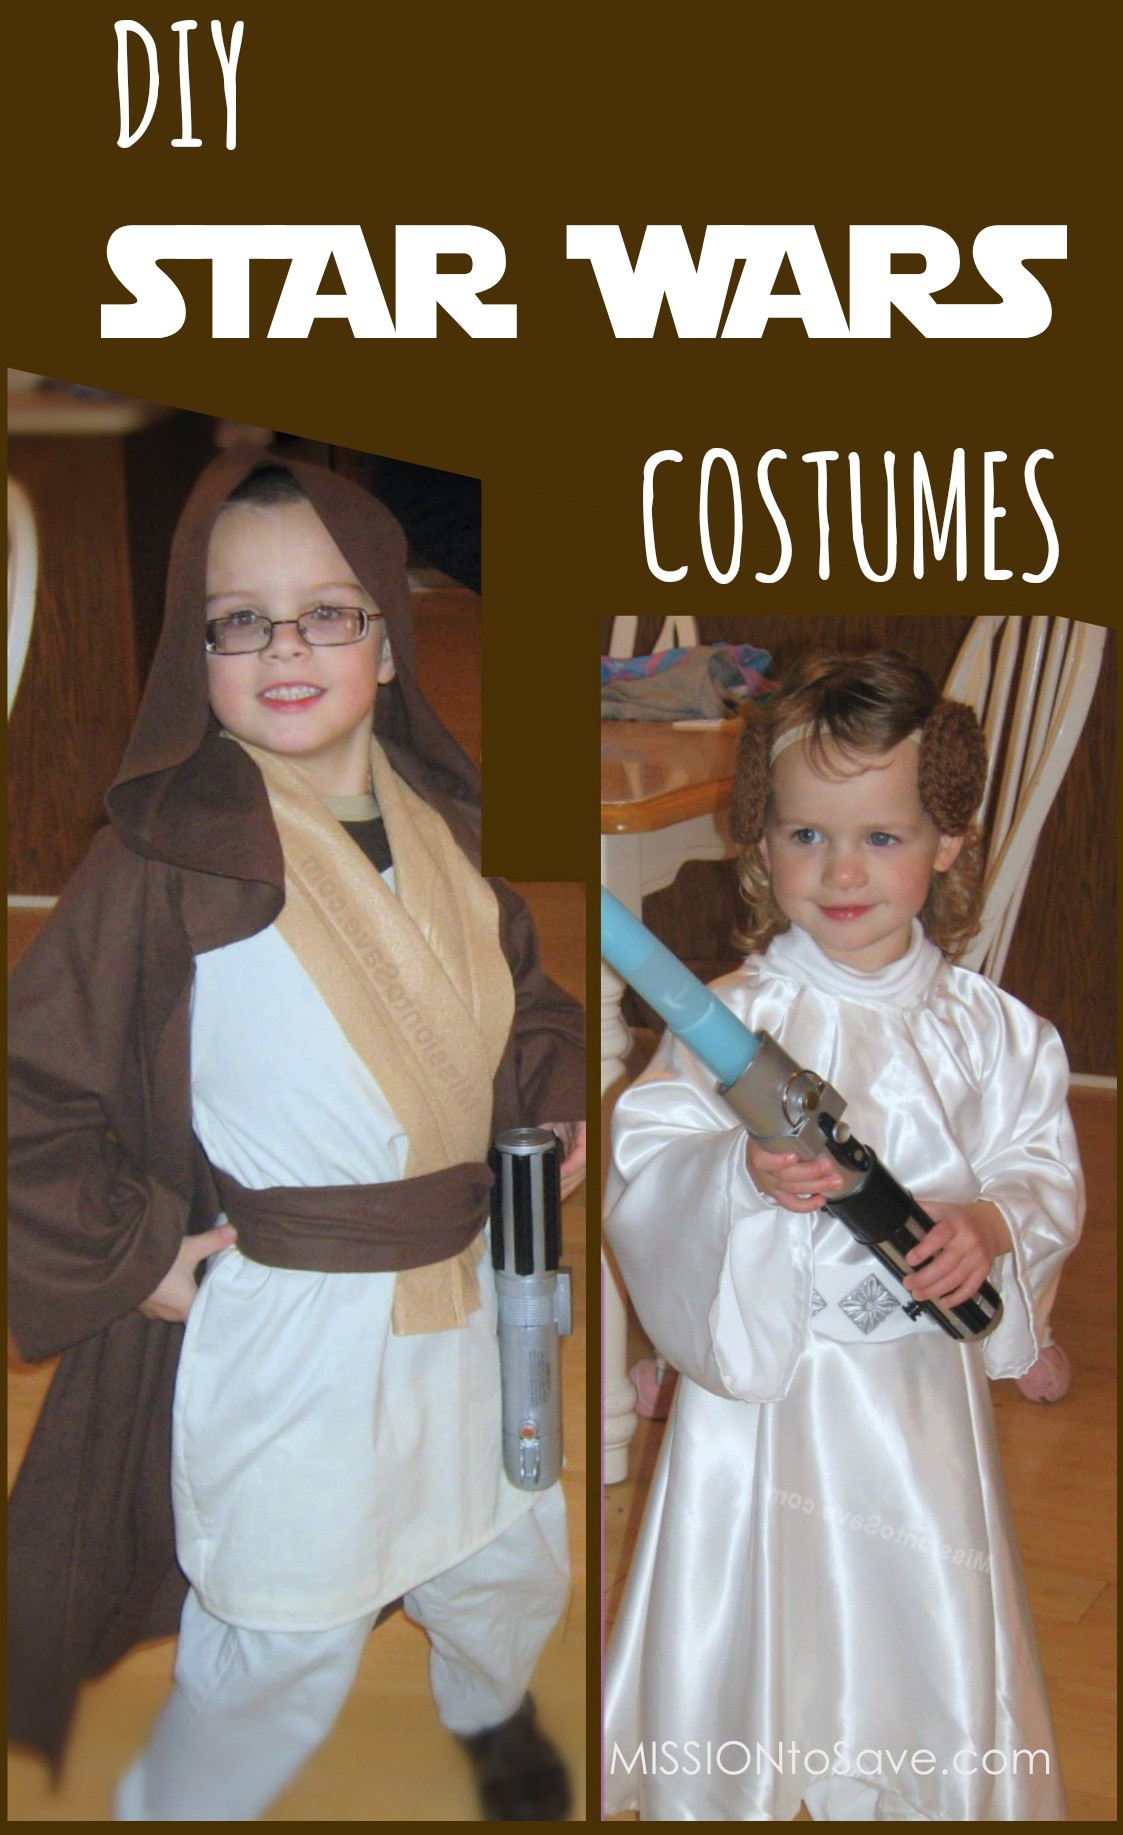 DIY Star Wars Costume
 DIY Star Wars Costumes Jedi and Princess Leia Mission